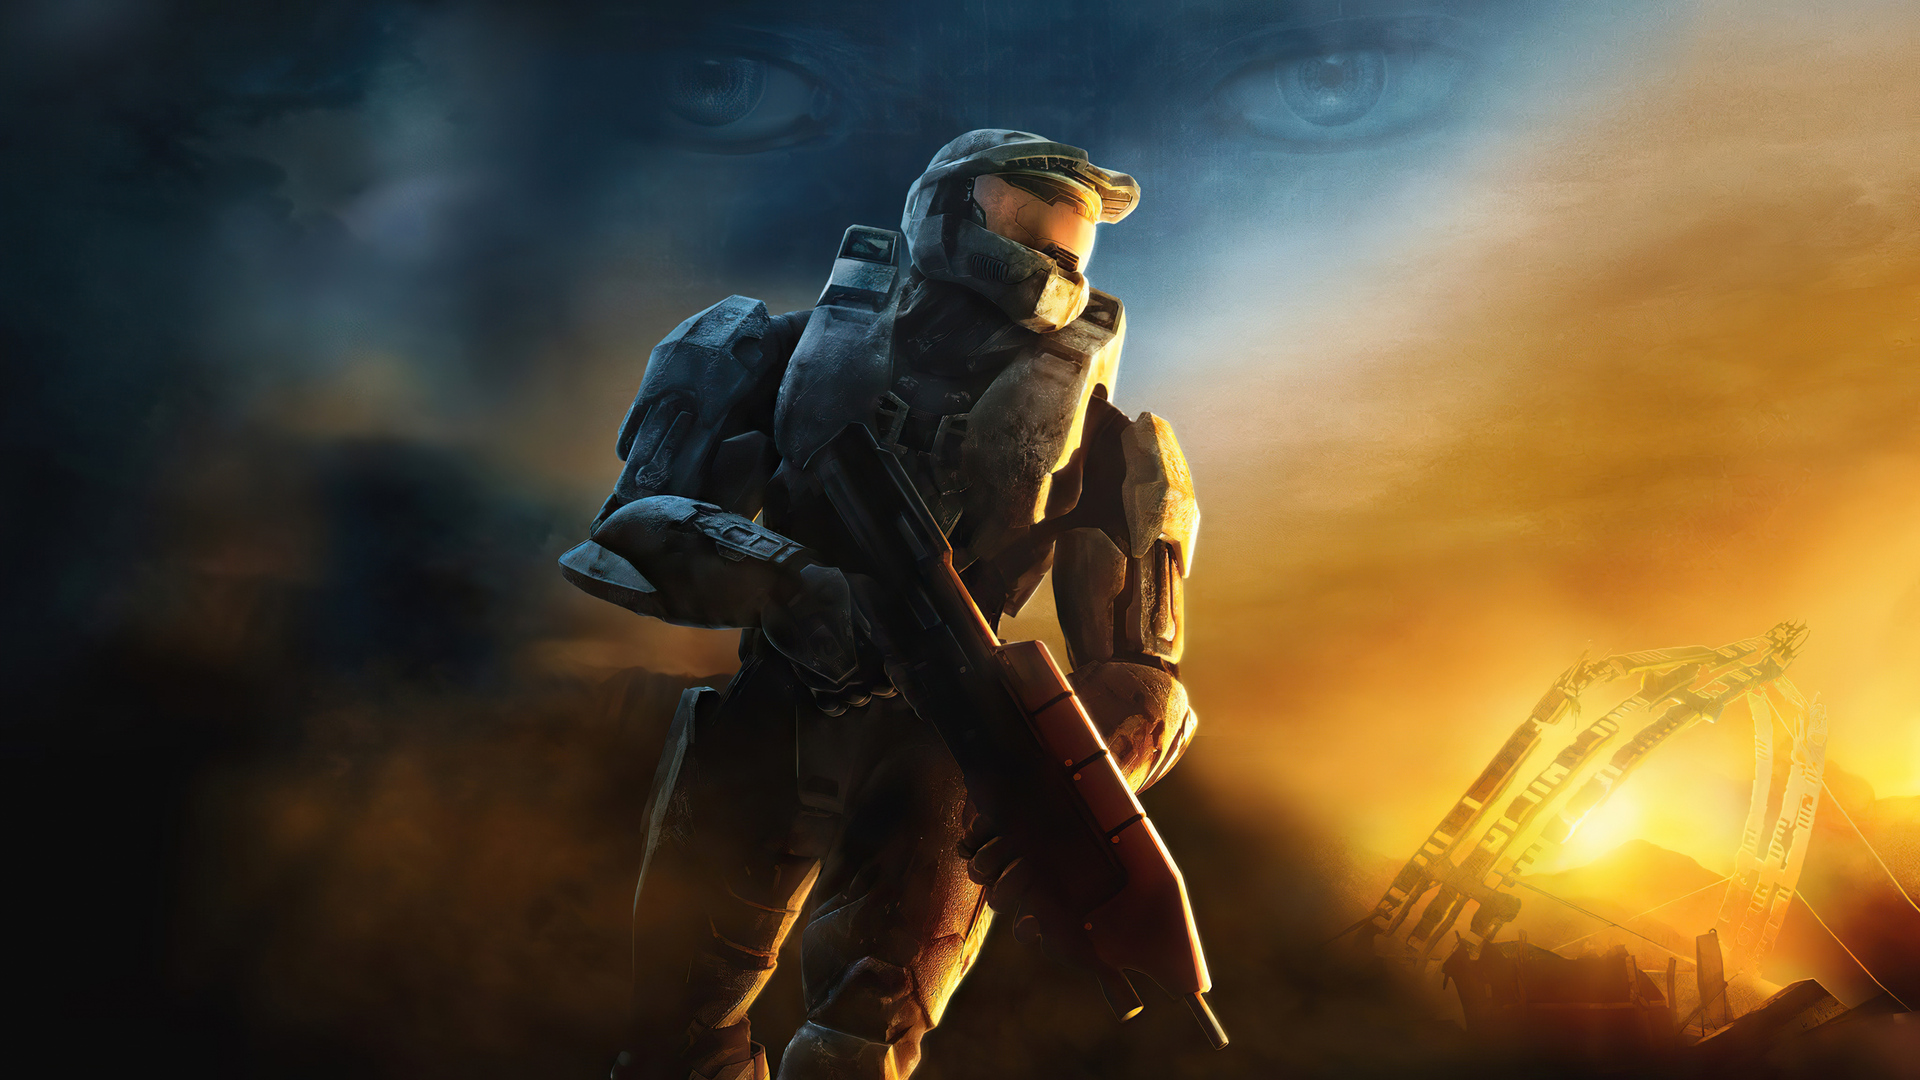 Halo 3 Wallpaper 1080p